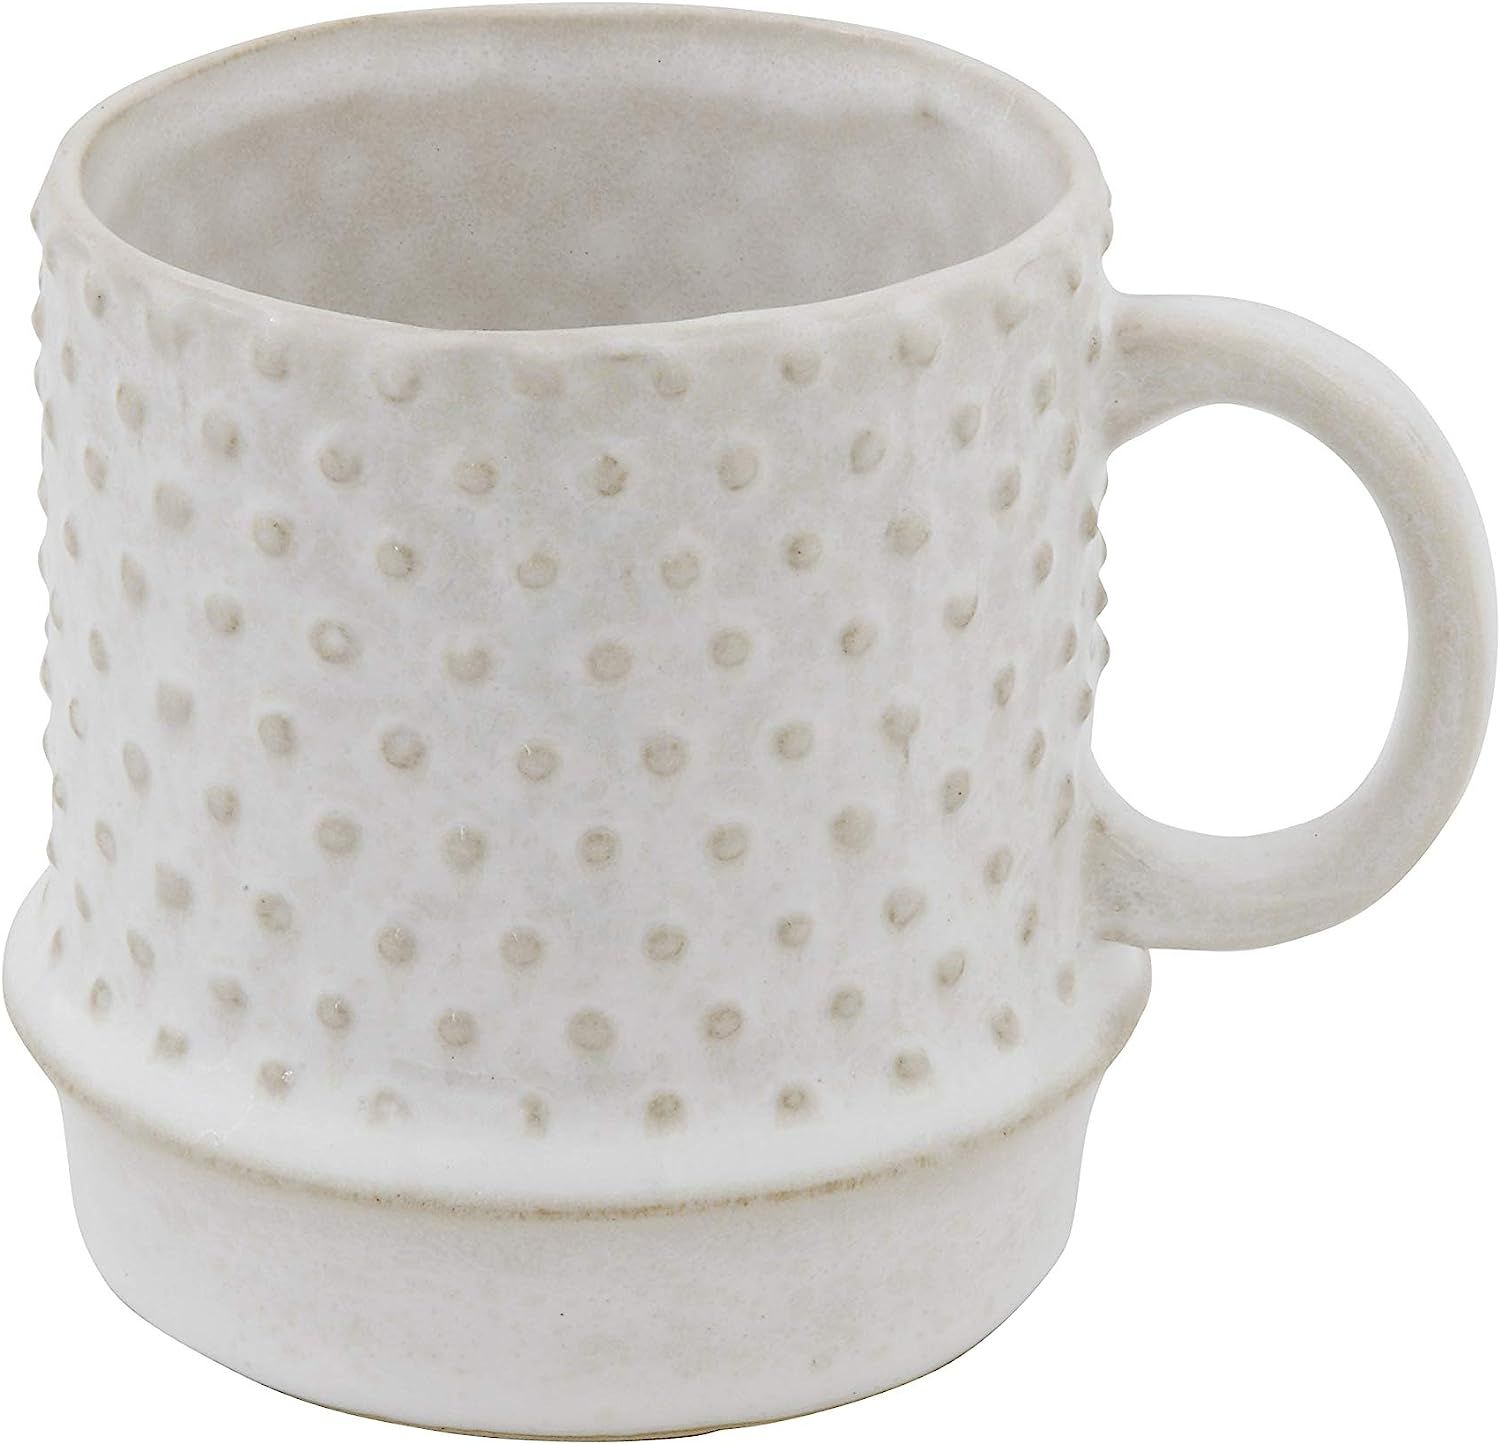 Bloomingville Stoneware Mug with Hobnail Pattern, 10 oz, White | Amazon (US)